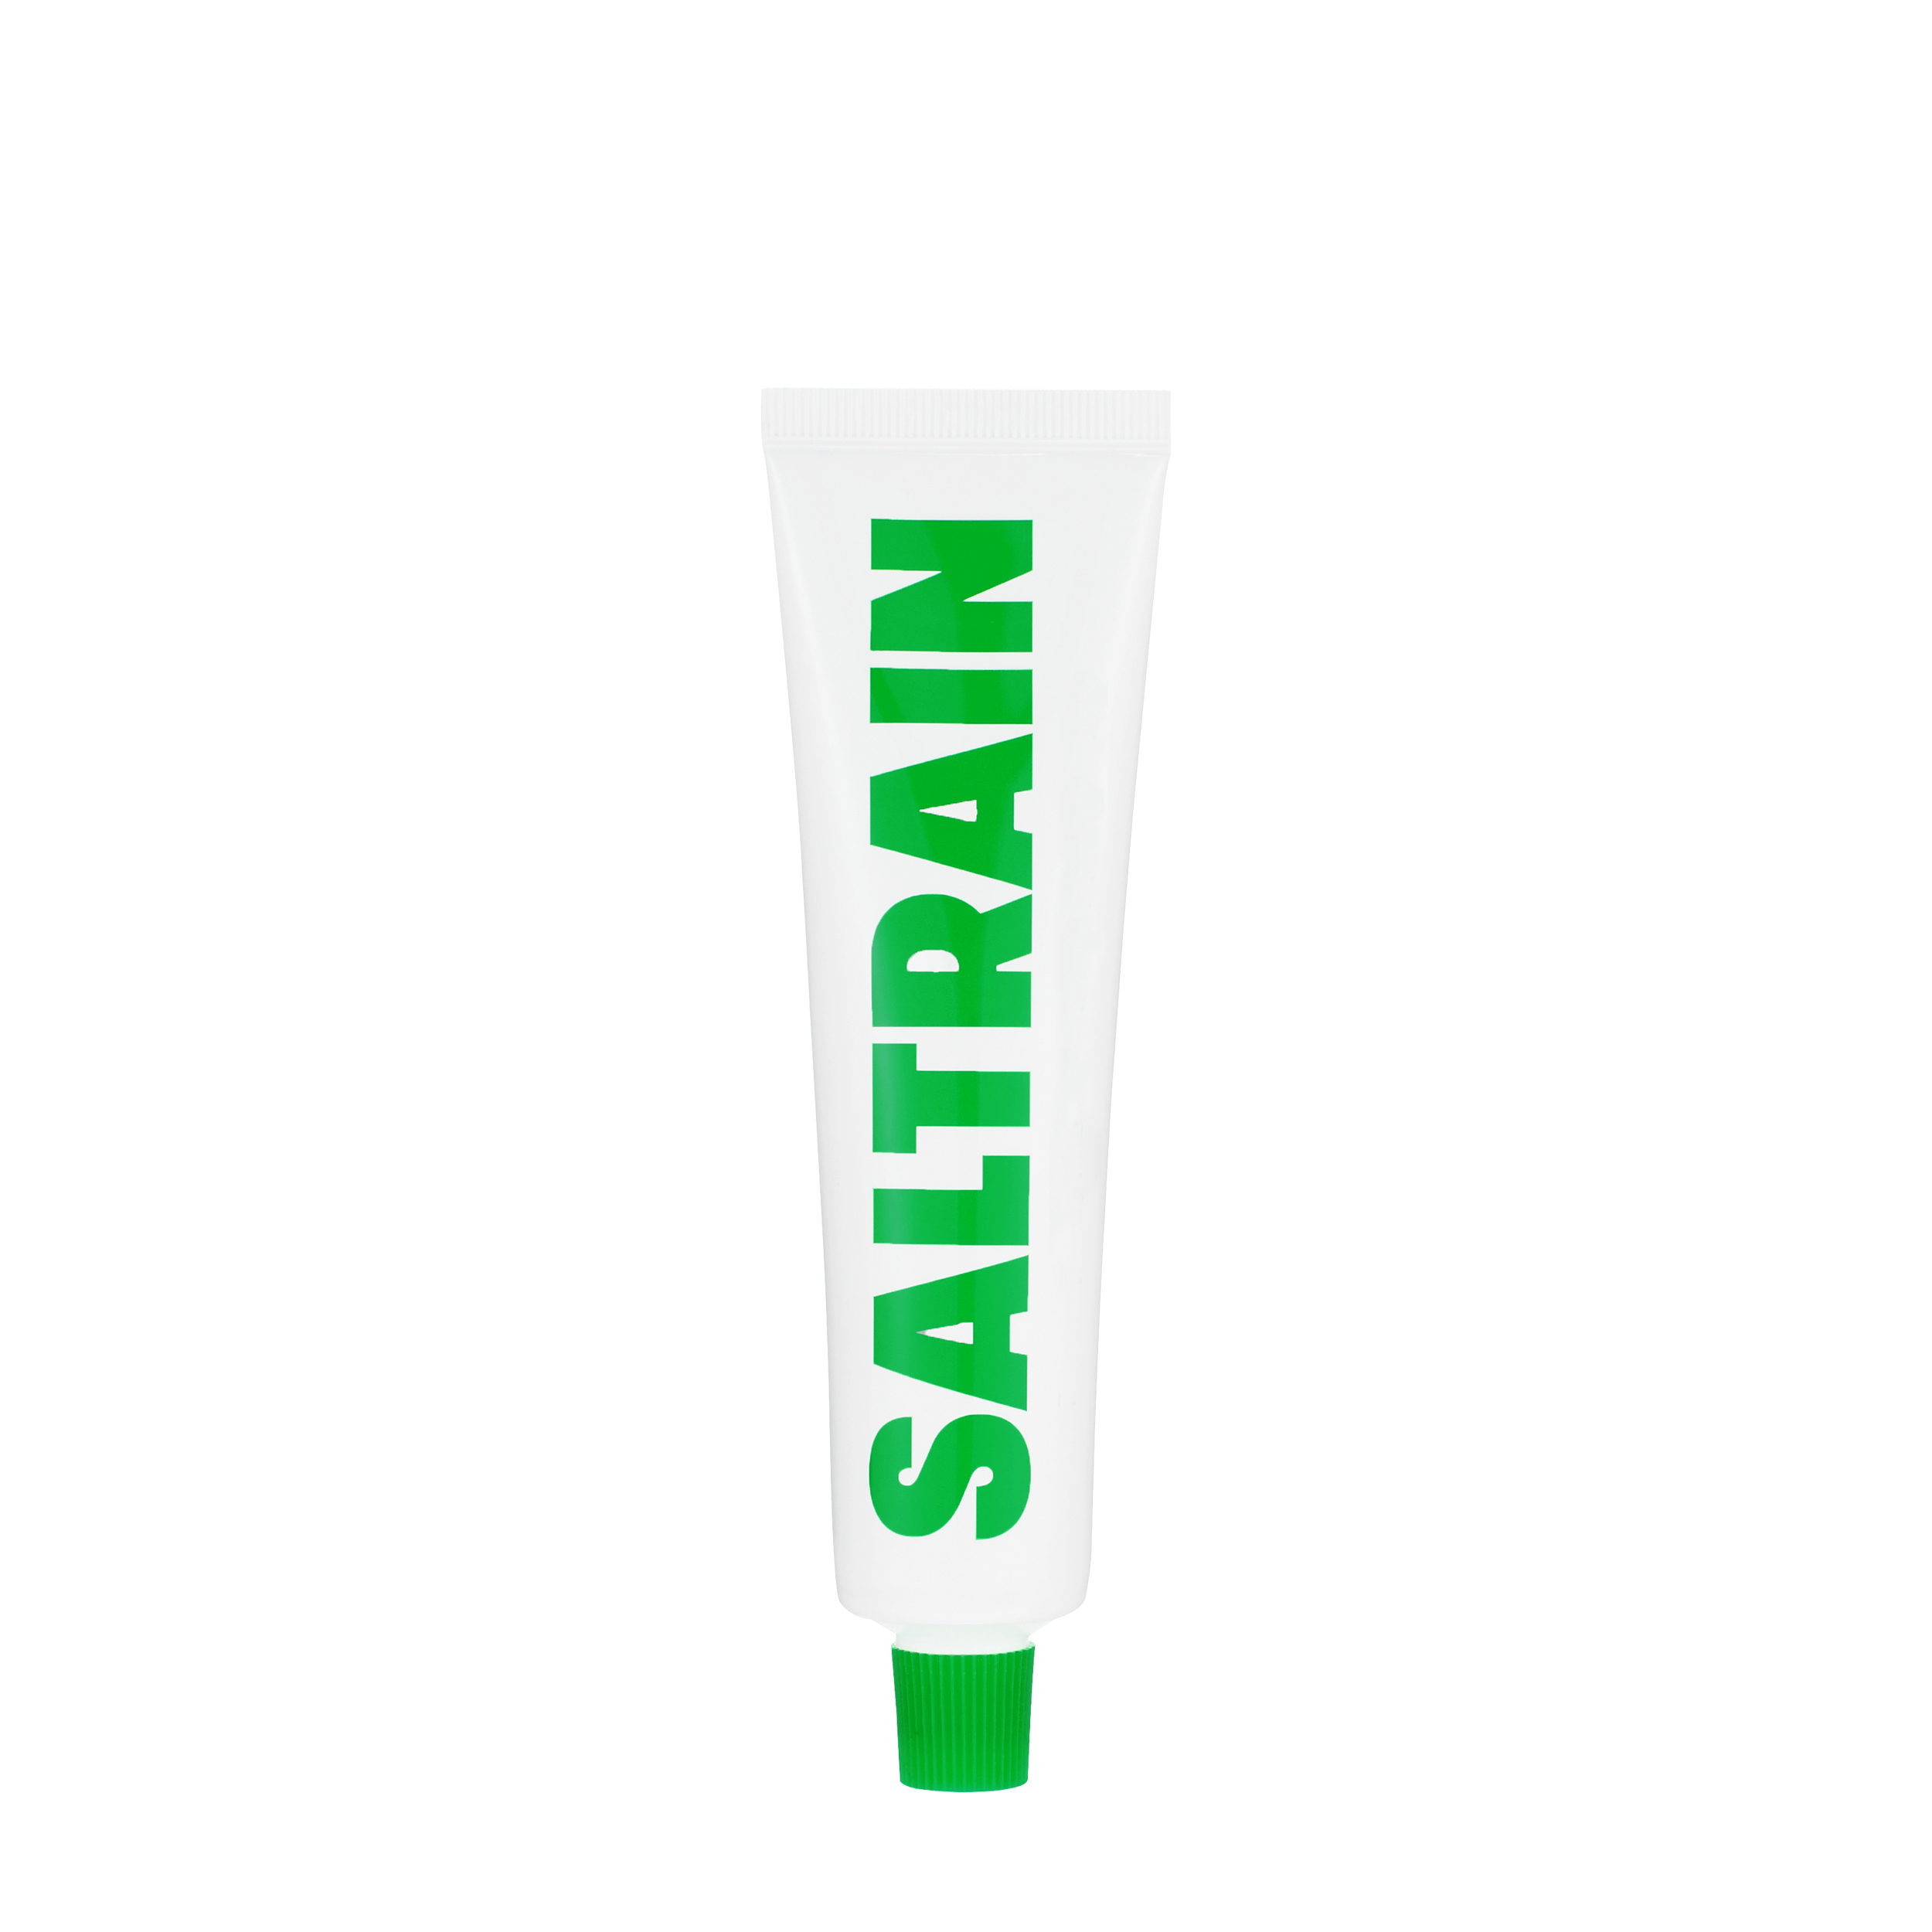 SALTRAIN SALTRAIN Успокаивающая зубная паста без фтора Tiger Leaf Toothpaste 100 гр